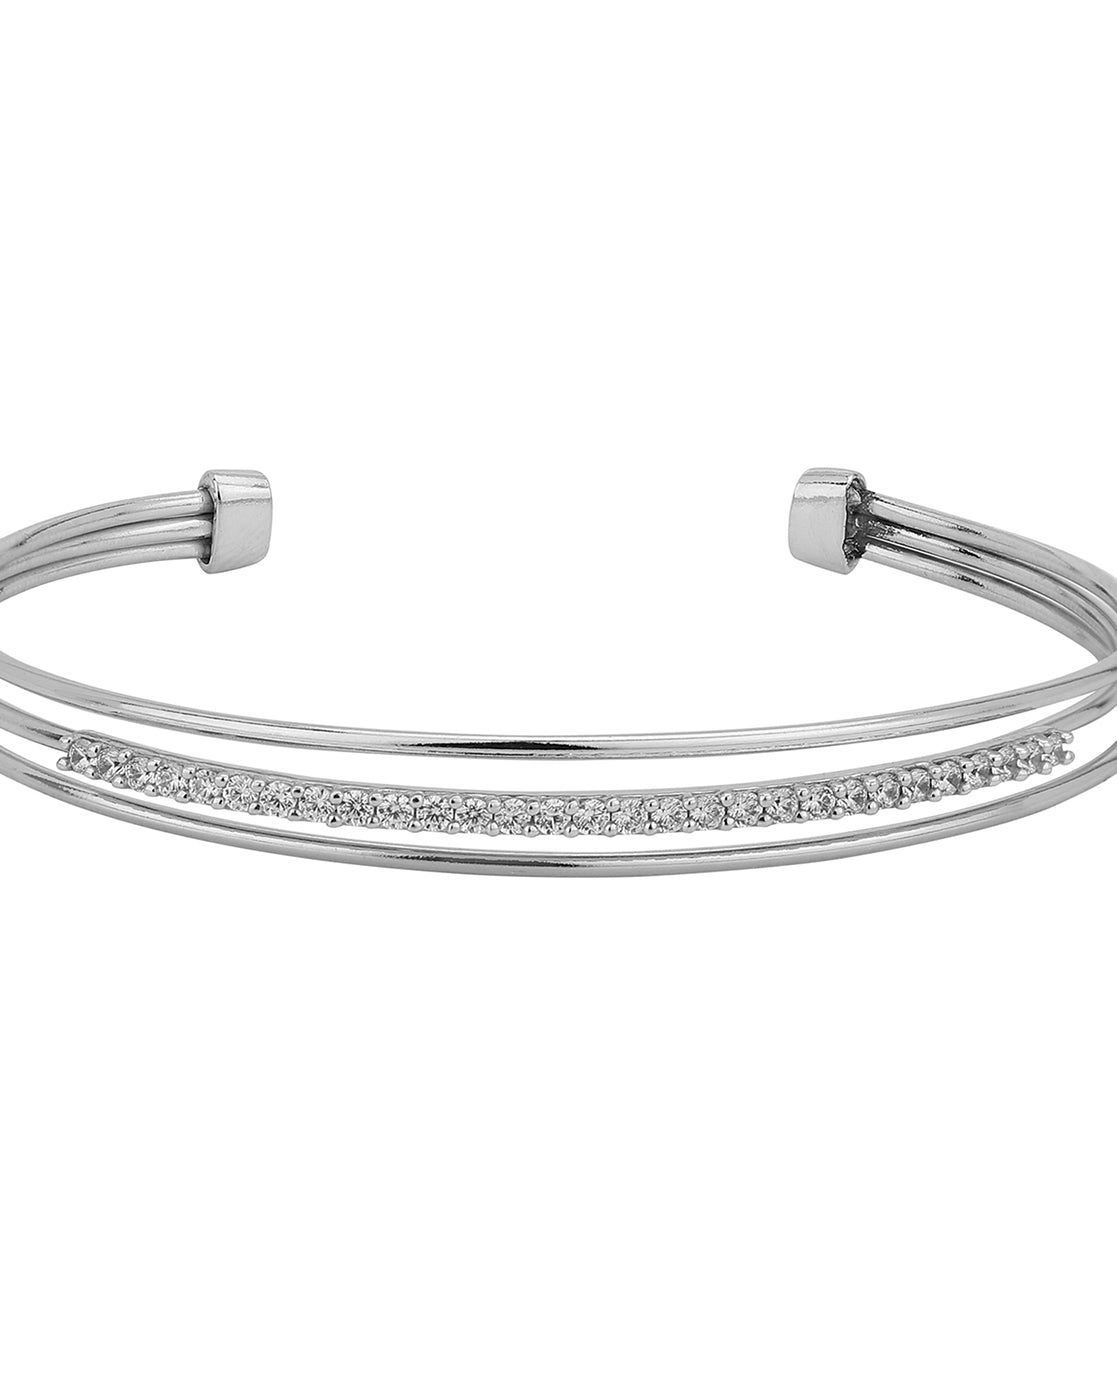 Buy Stylish Women's Rose Gold Cuff Bracelet Online – The Jewelbox